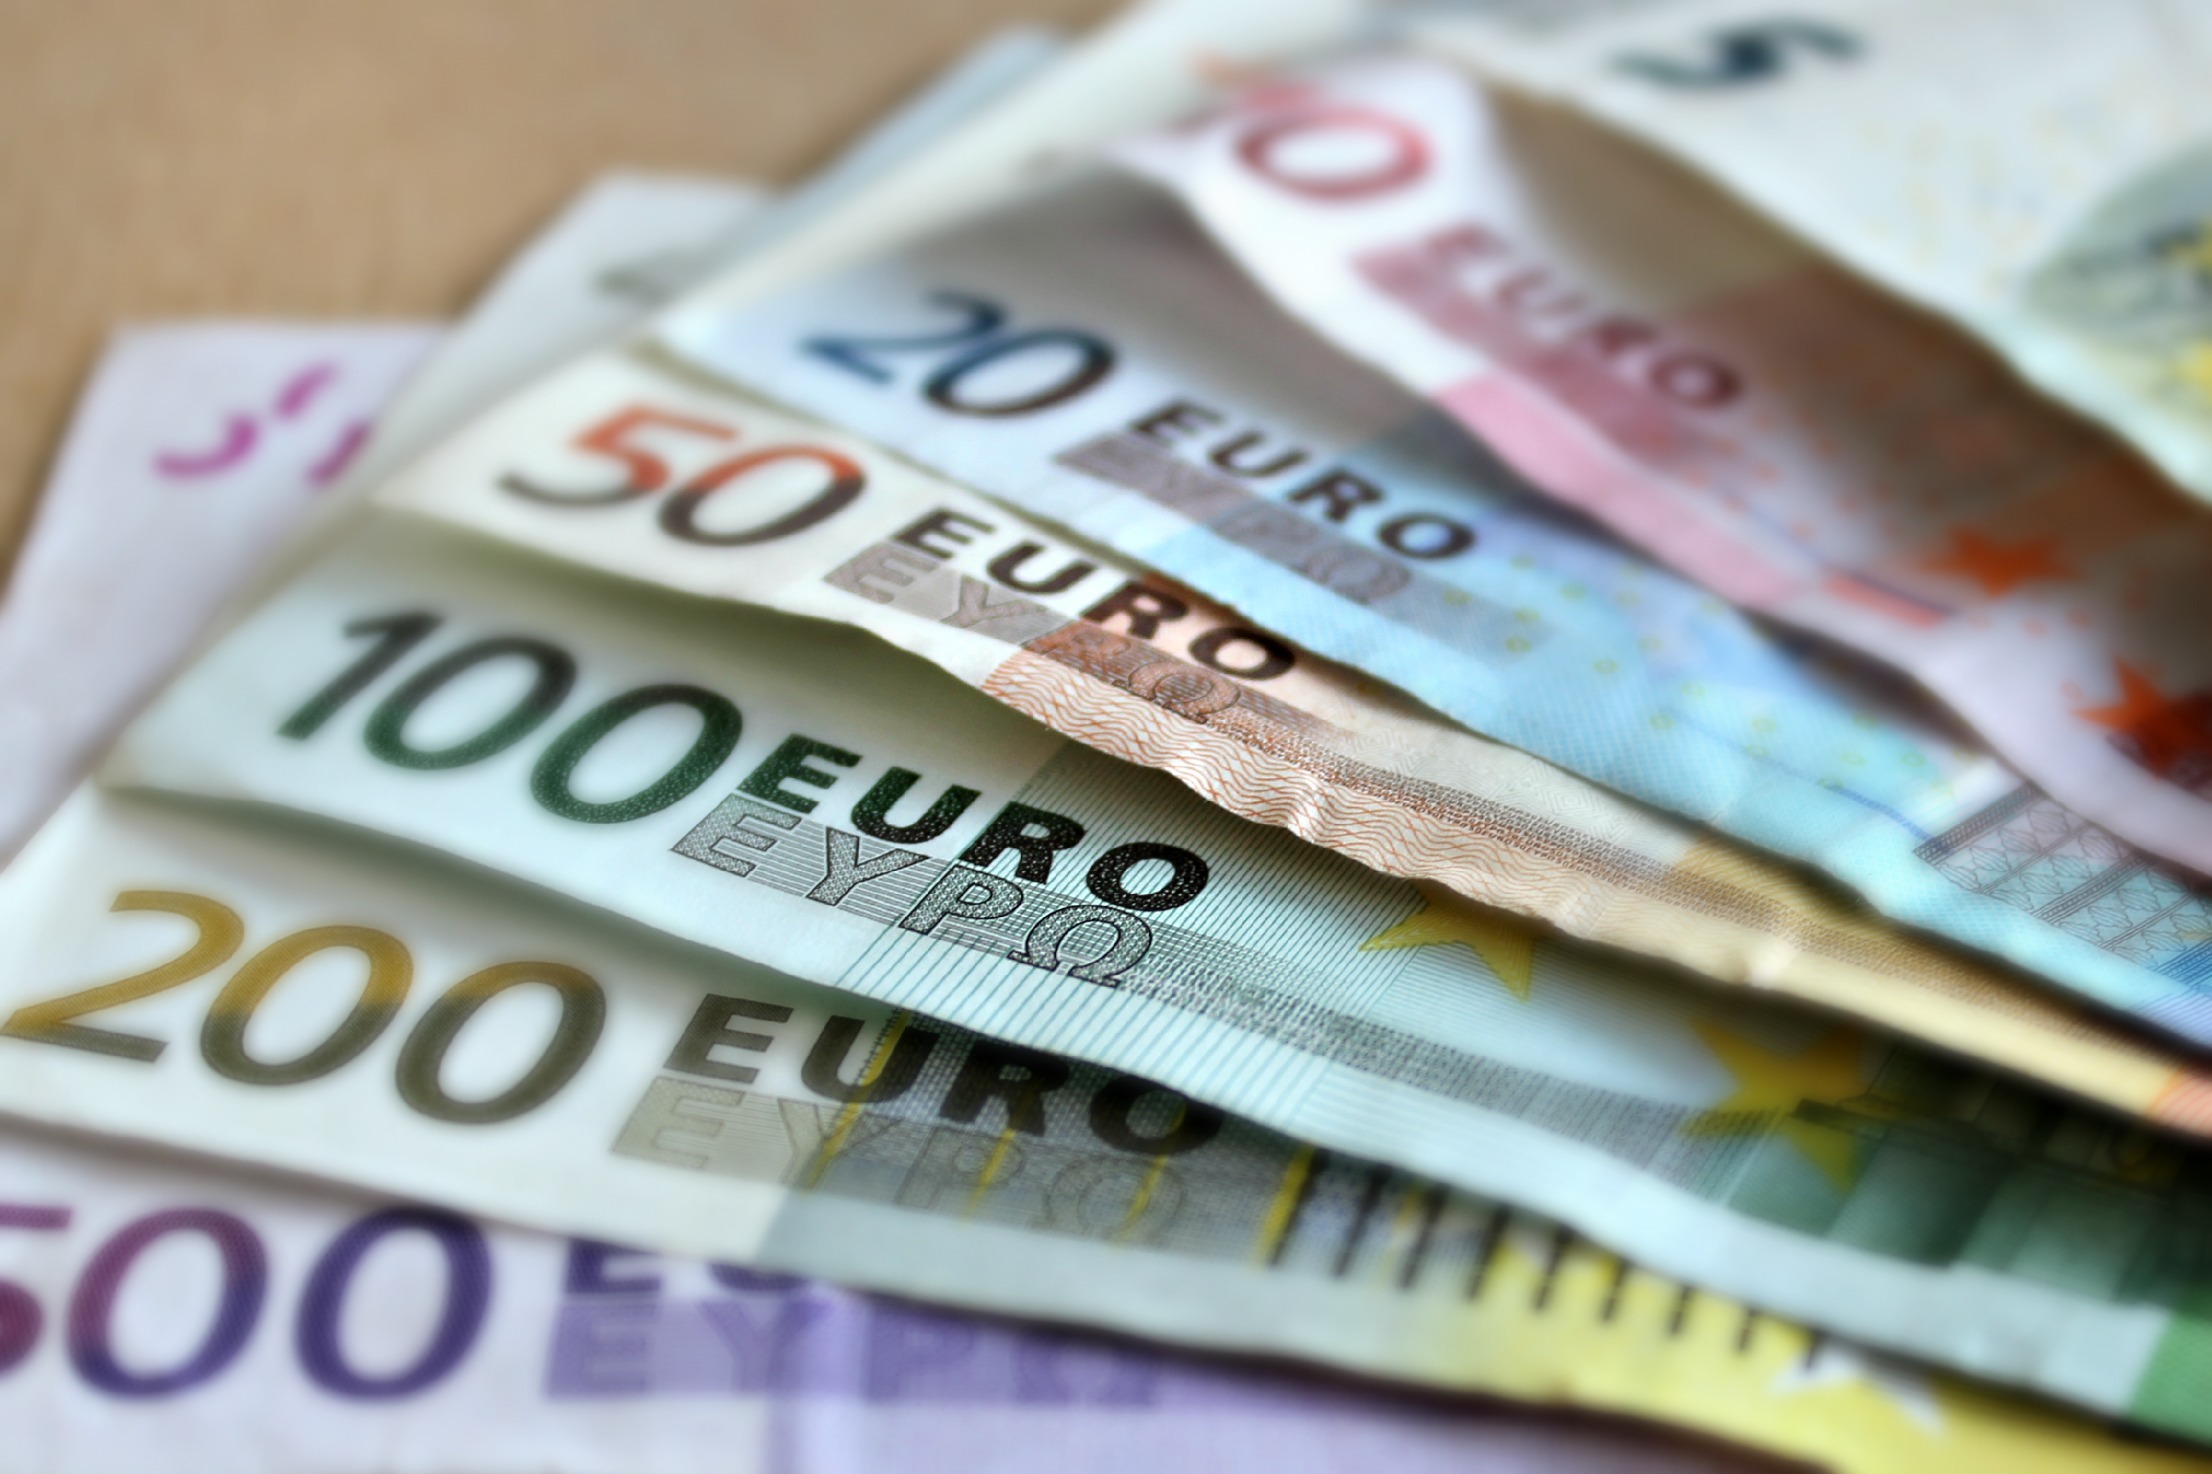 Binance to Launch Euro Trading Pairs This Year